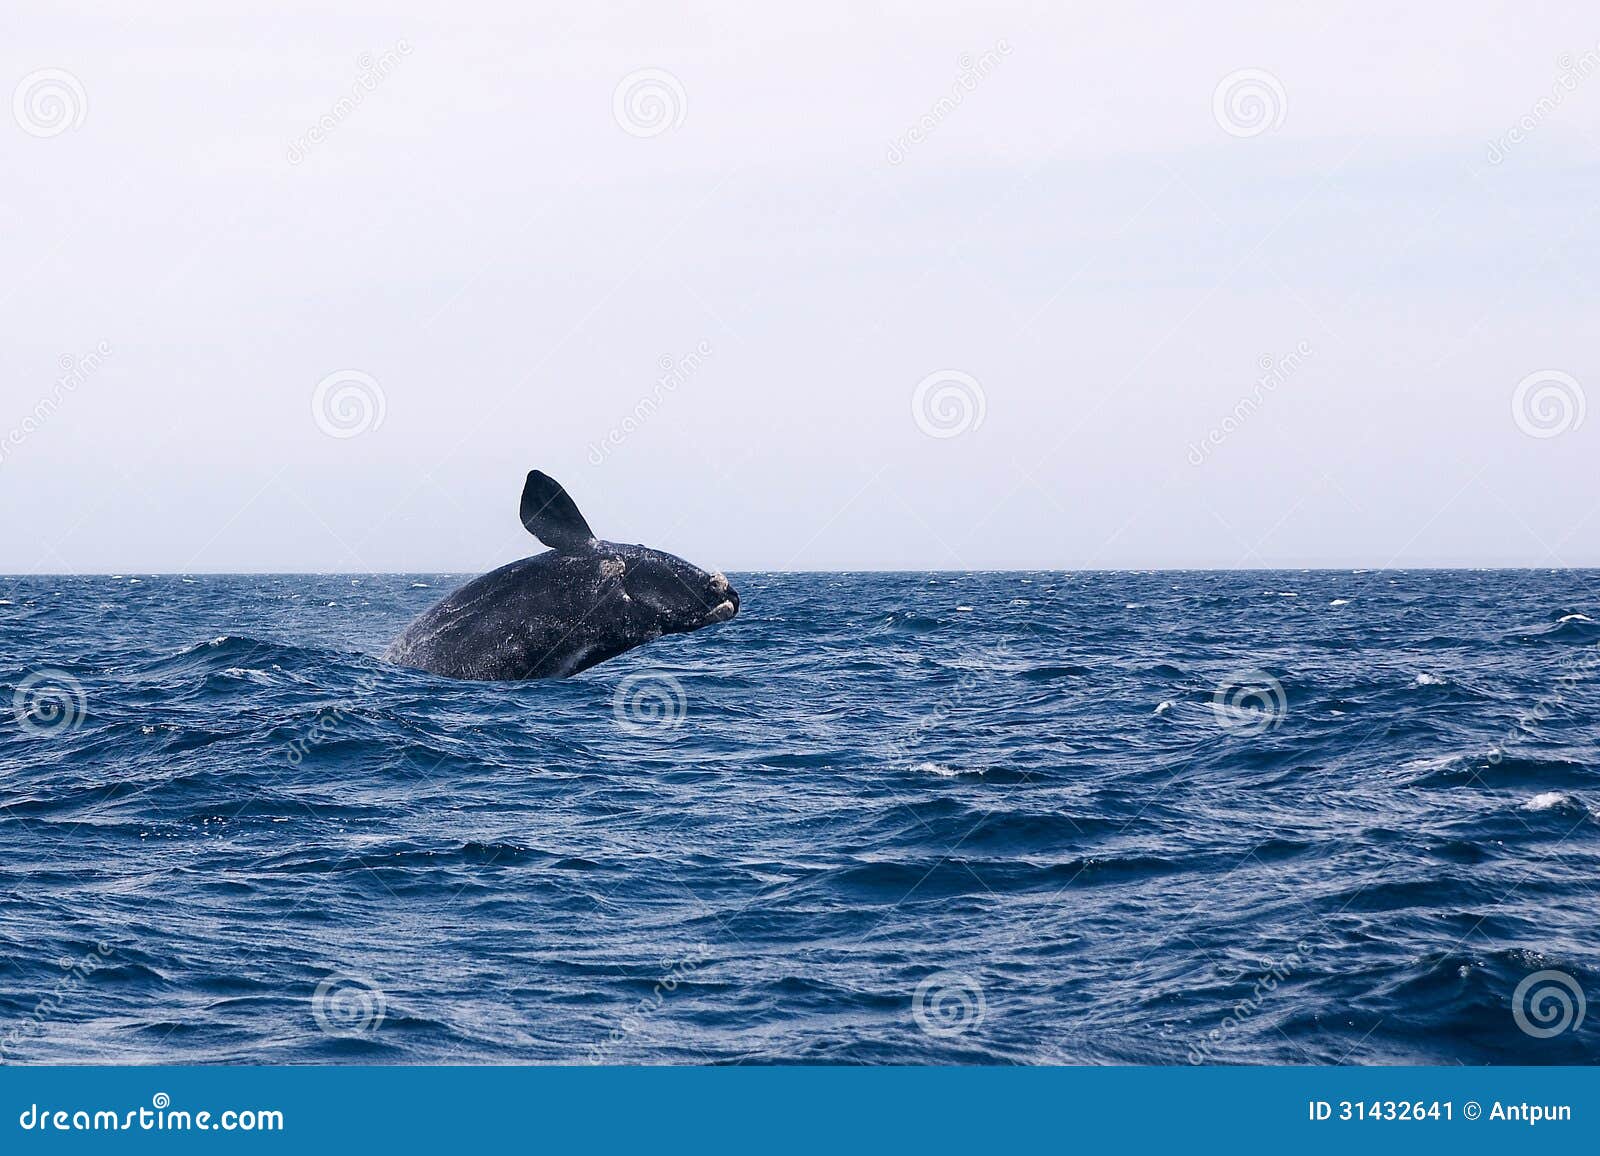 whale cetacean eubalaena australis